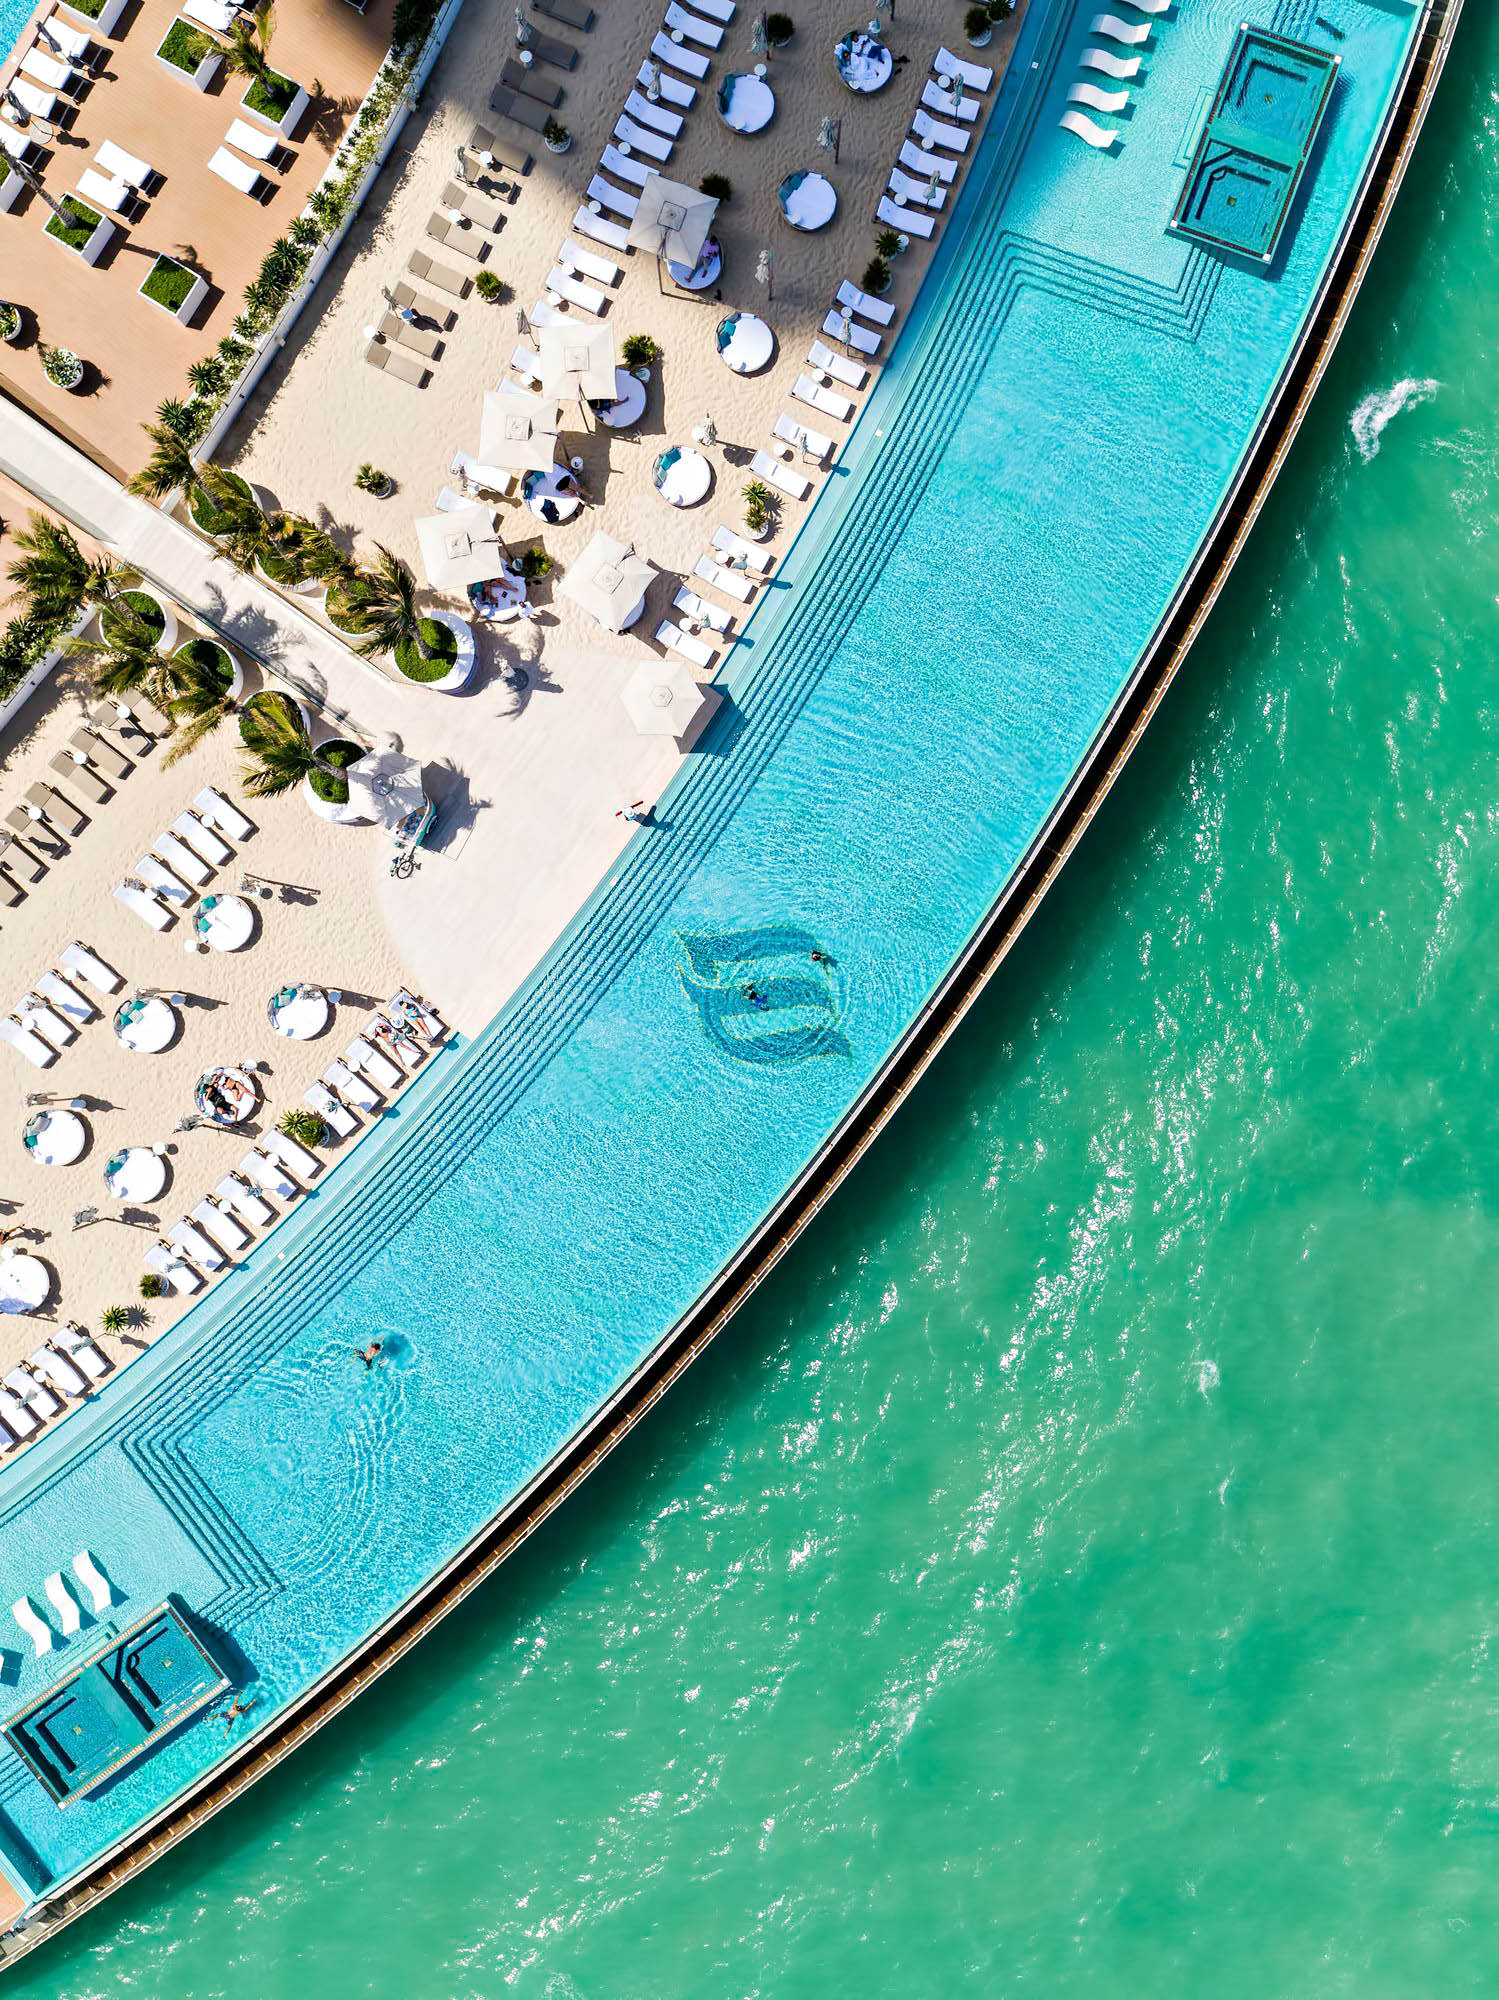 Burj Al Arab Jumeirah Hotel – Dubai, UAE – Burj Al Arab Terrace Infinity Pool Overhead